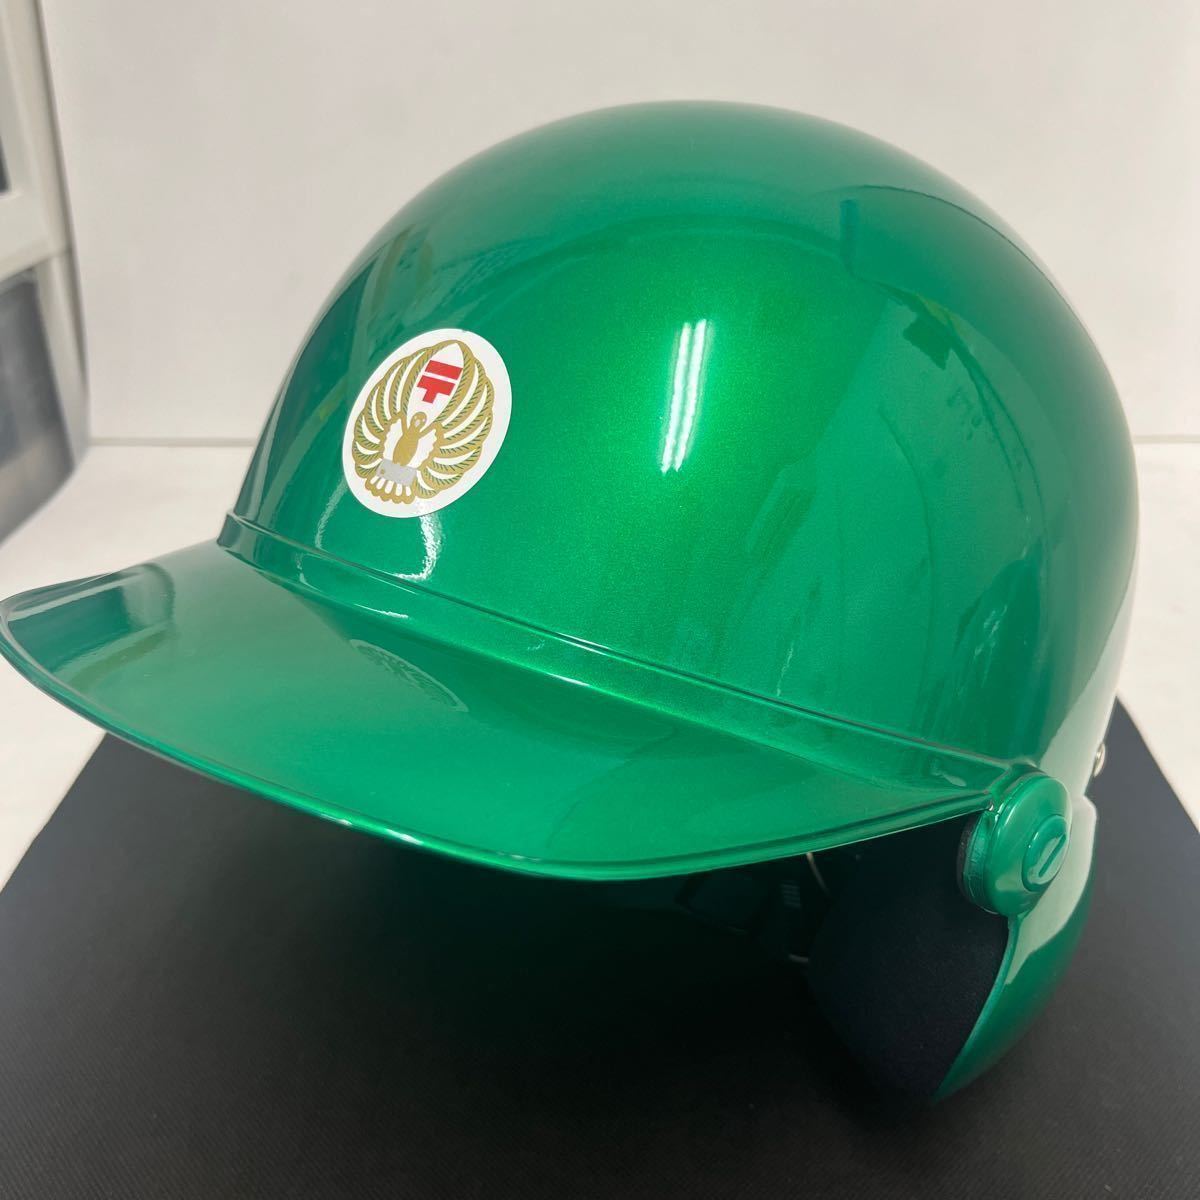  postal helmet . car safety cap no. A type 125cc and downward for emergency . for postal . settled .2 number type green helmet helmet rare ( control 1)